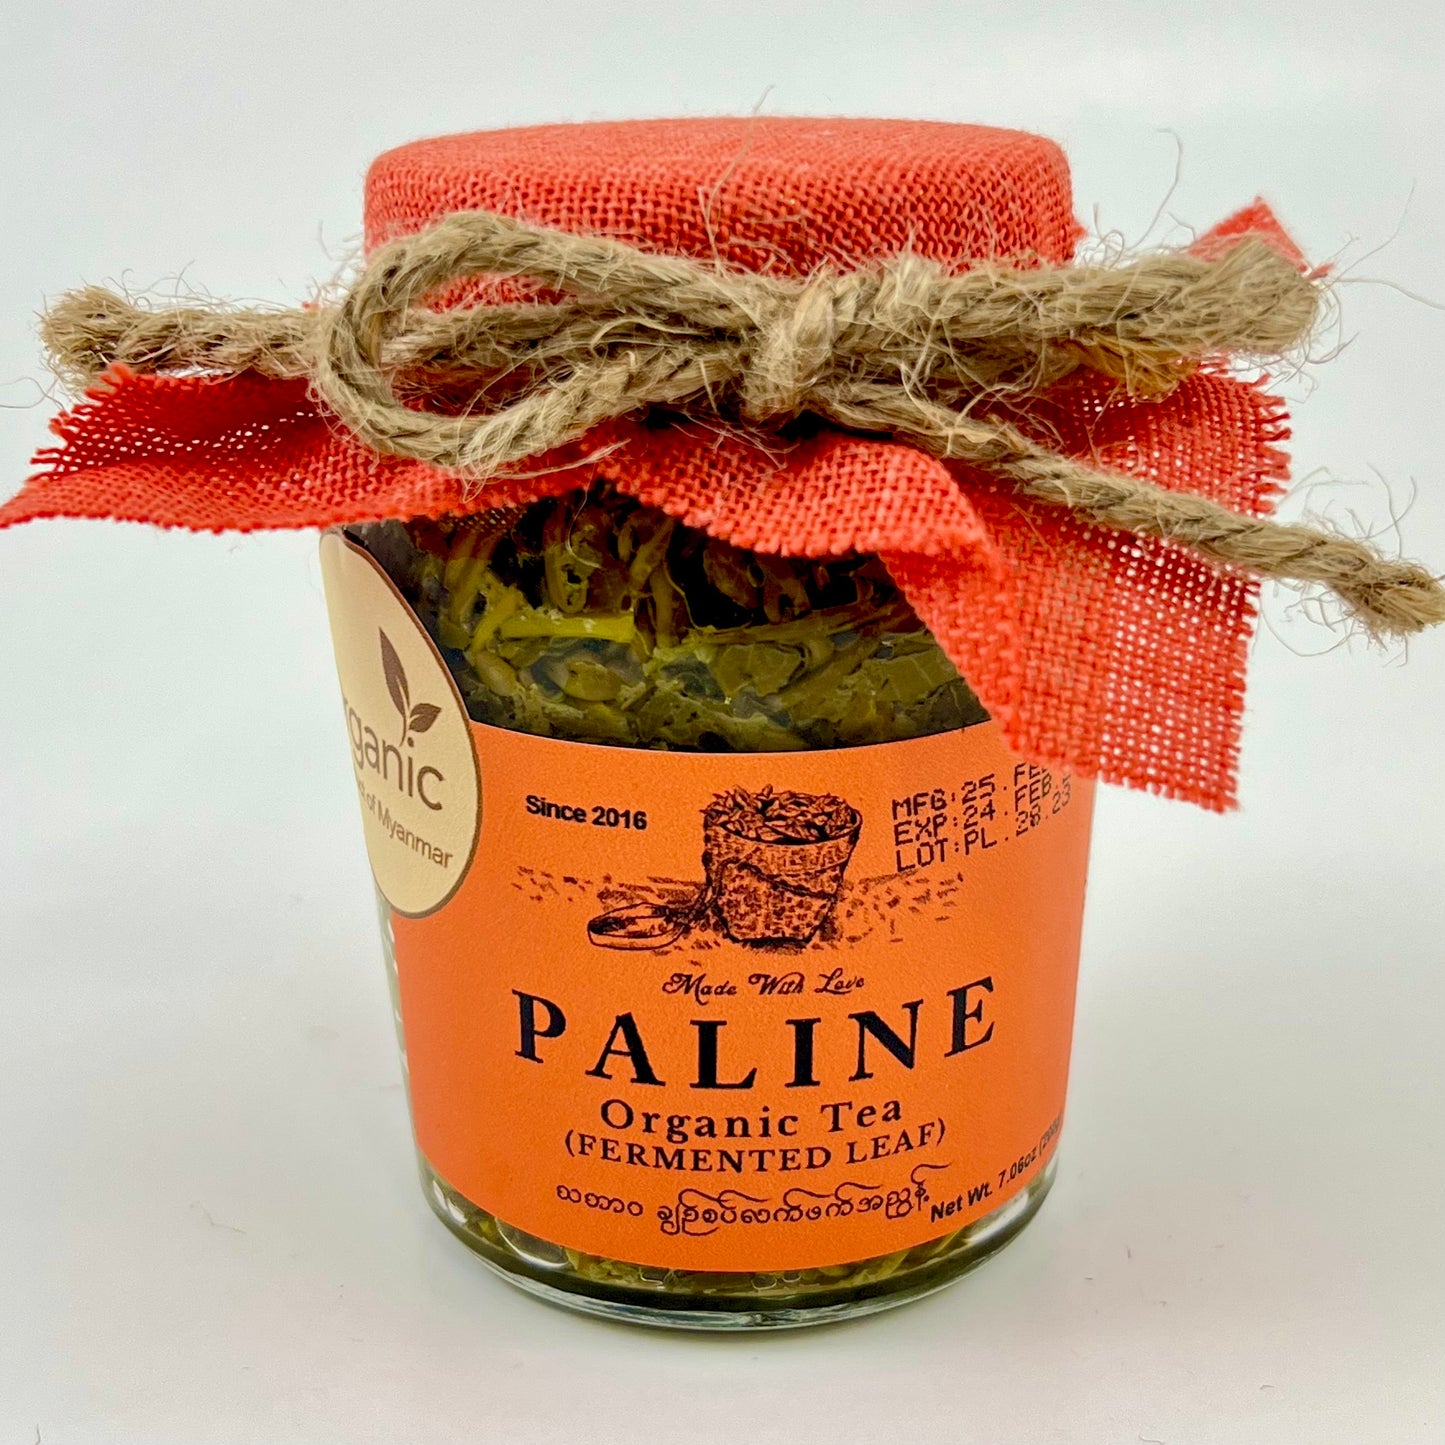 Paline Organic Tea Leaf (Hot and Sour Flavor) for Tea Salad Dressing (Spicy) (7.06oz) Ready to Eat ပလိုင်းလက်ဖက်အညွှန့်နှပ် ချဉ်စပ်